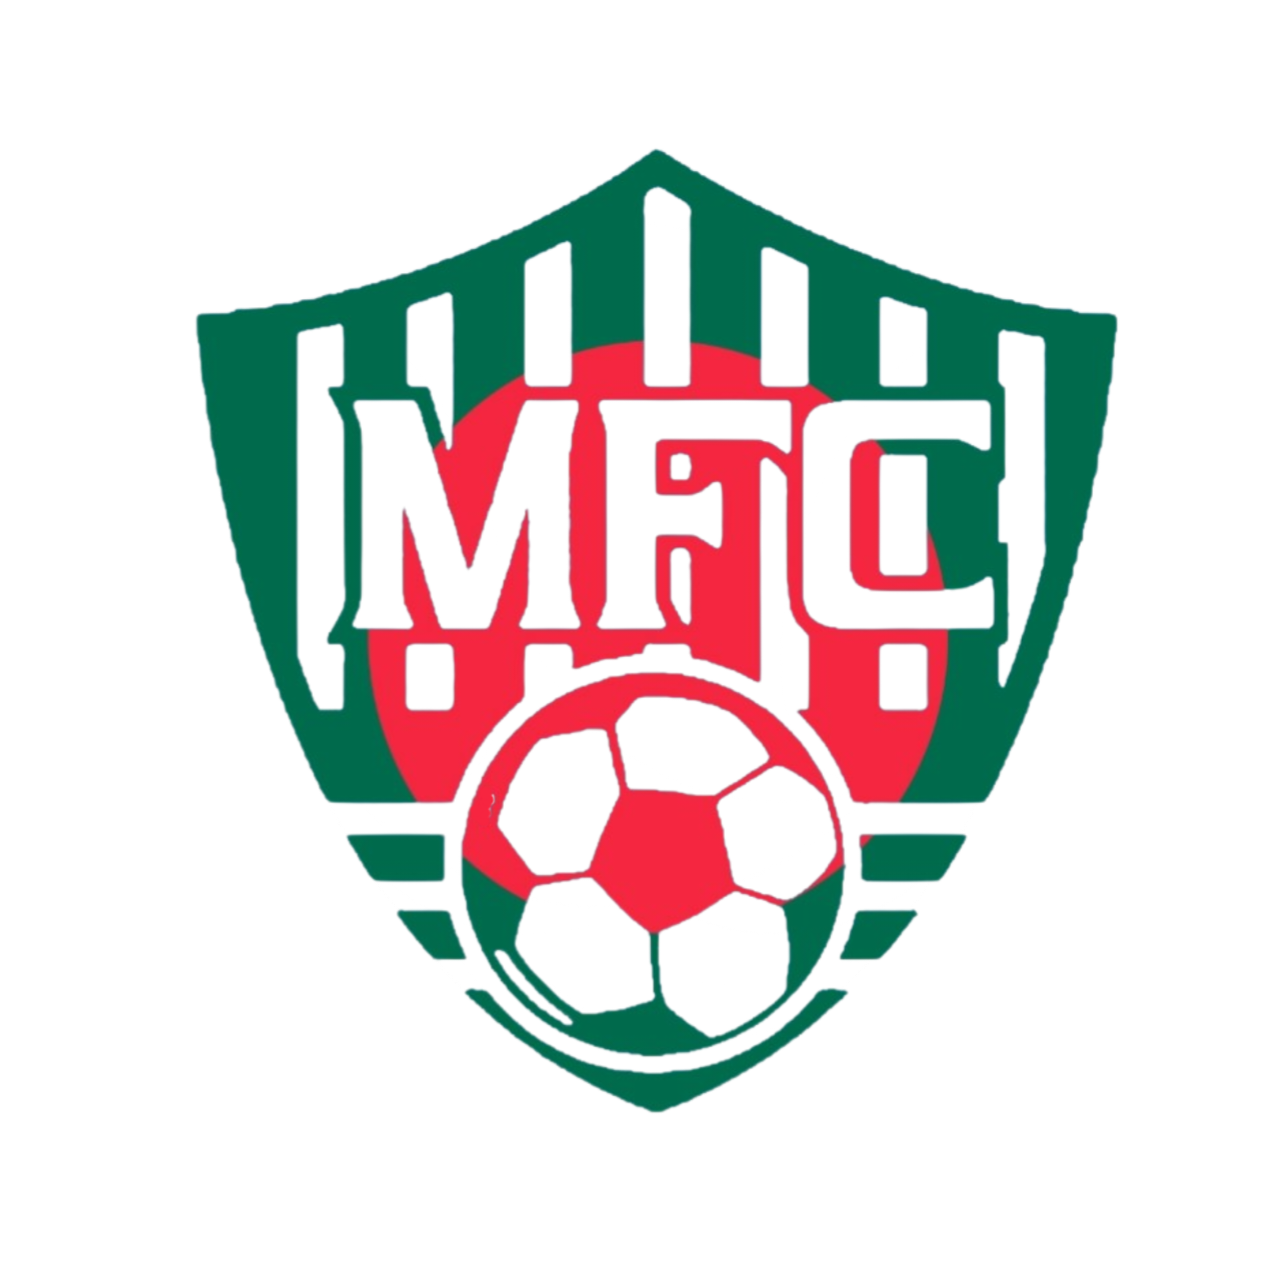 Mfc abstract monogram shield logo design on black Vector Image